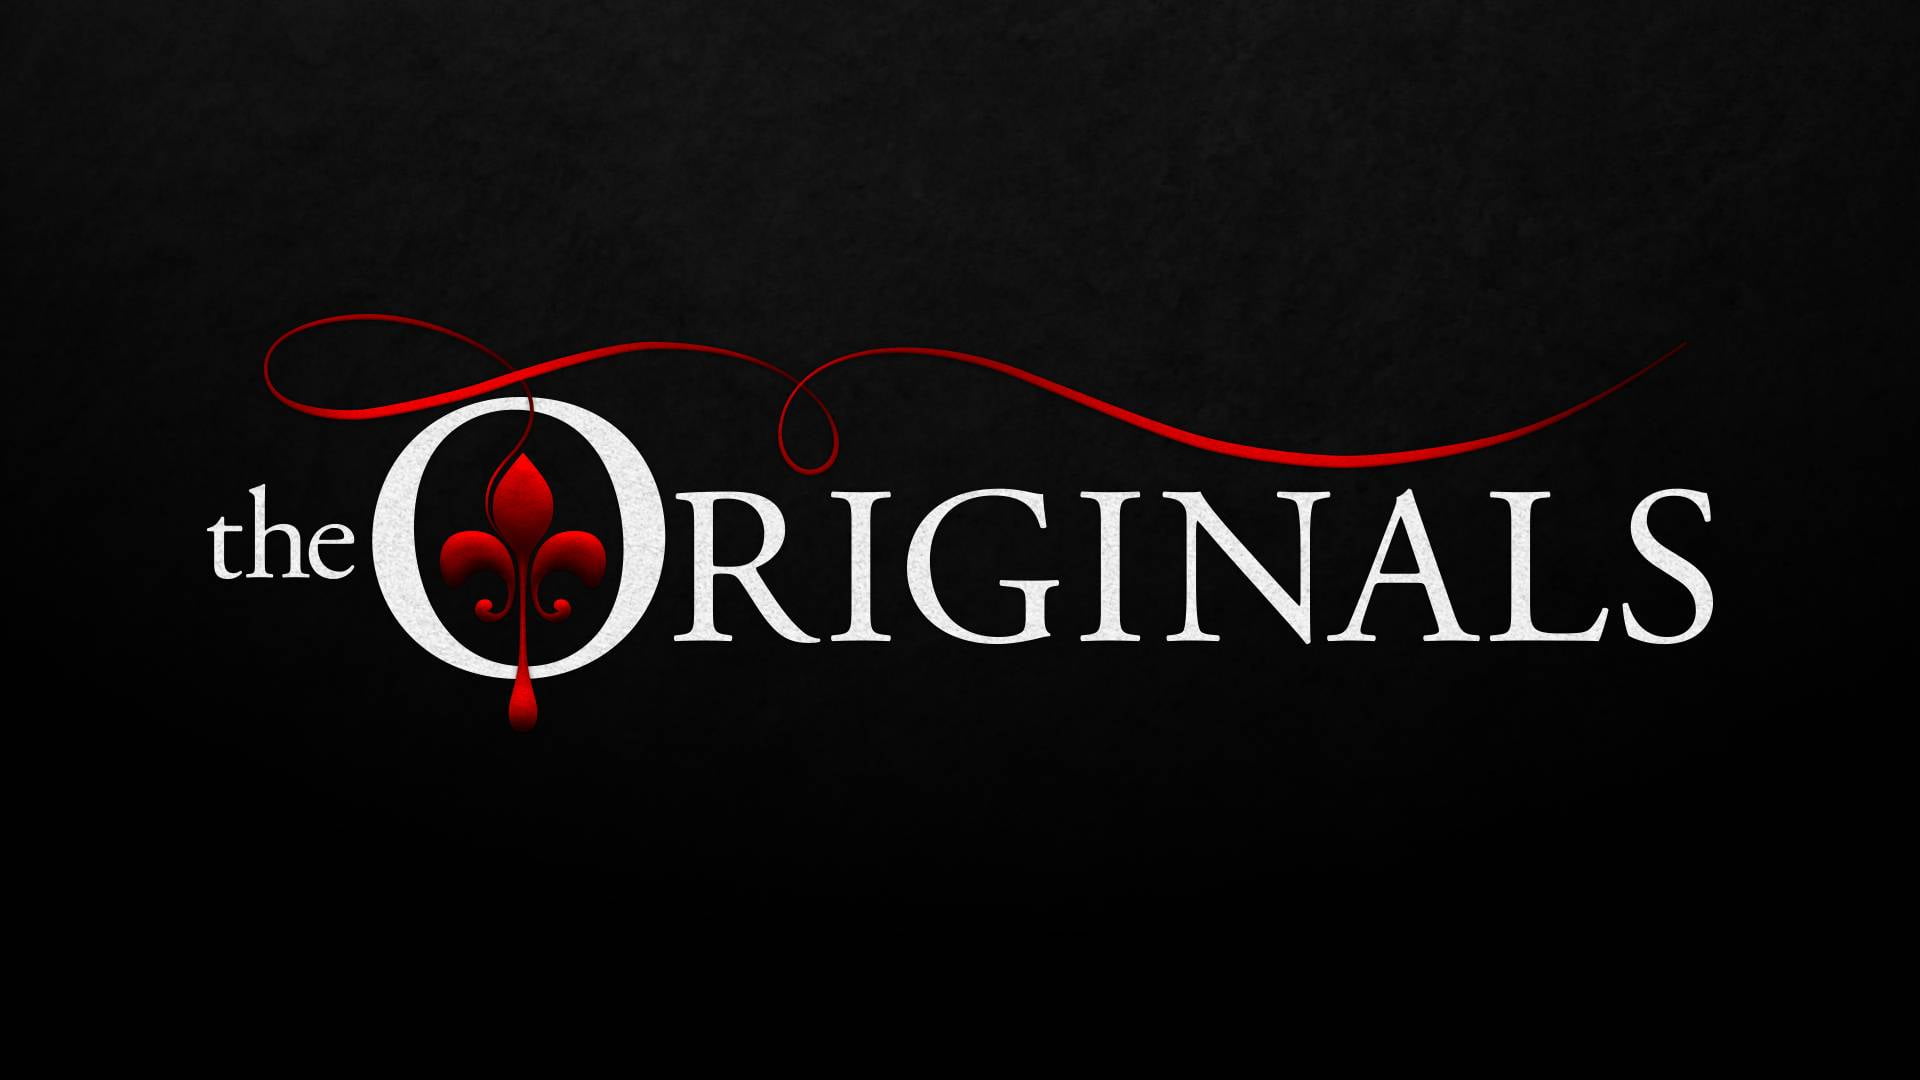 The Originals logo, The Originals, Rebecka Mickaelson, Niklaus Mikaelson, Elijah Mikaelson